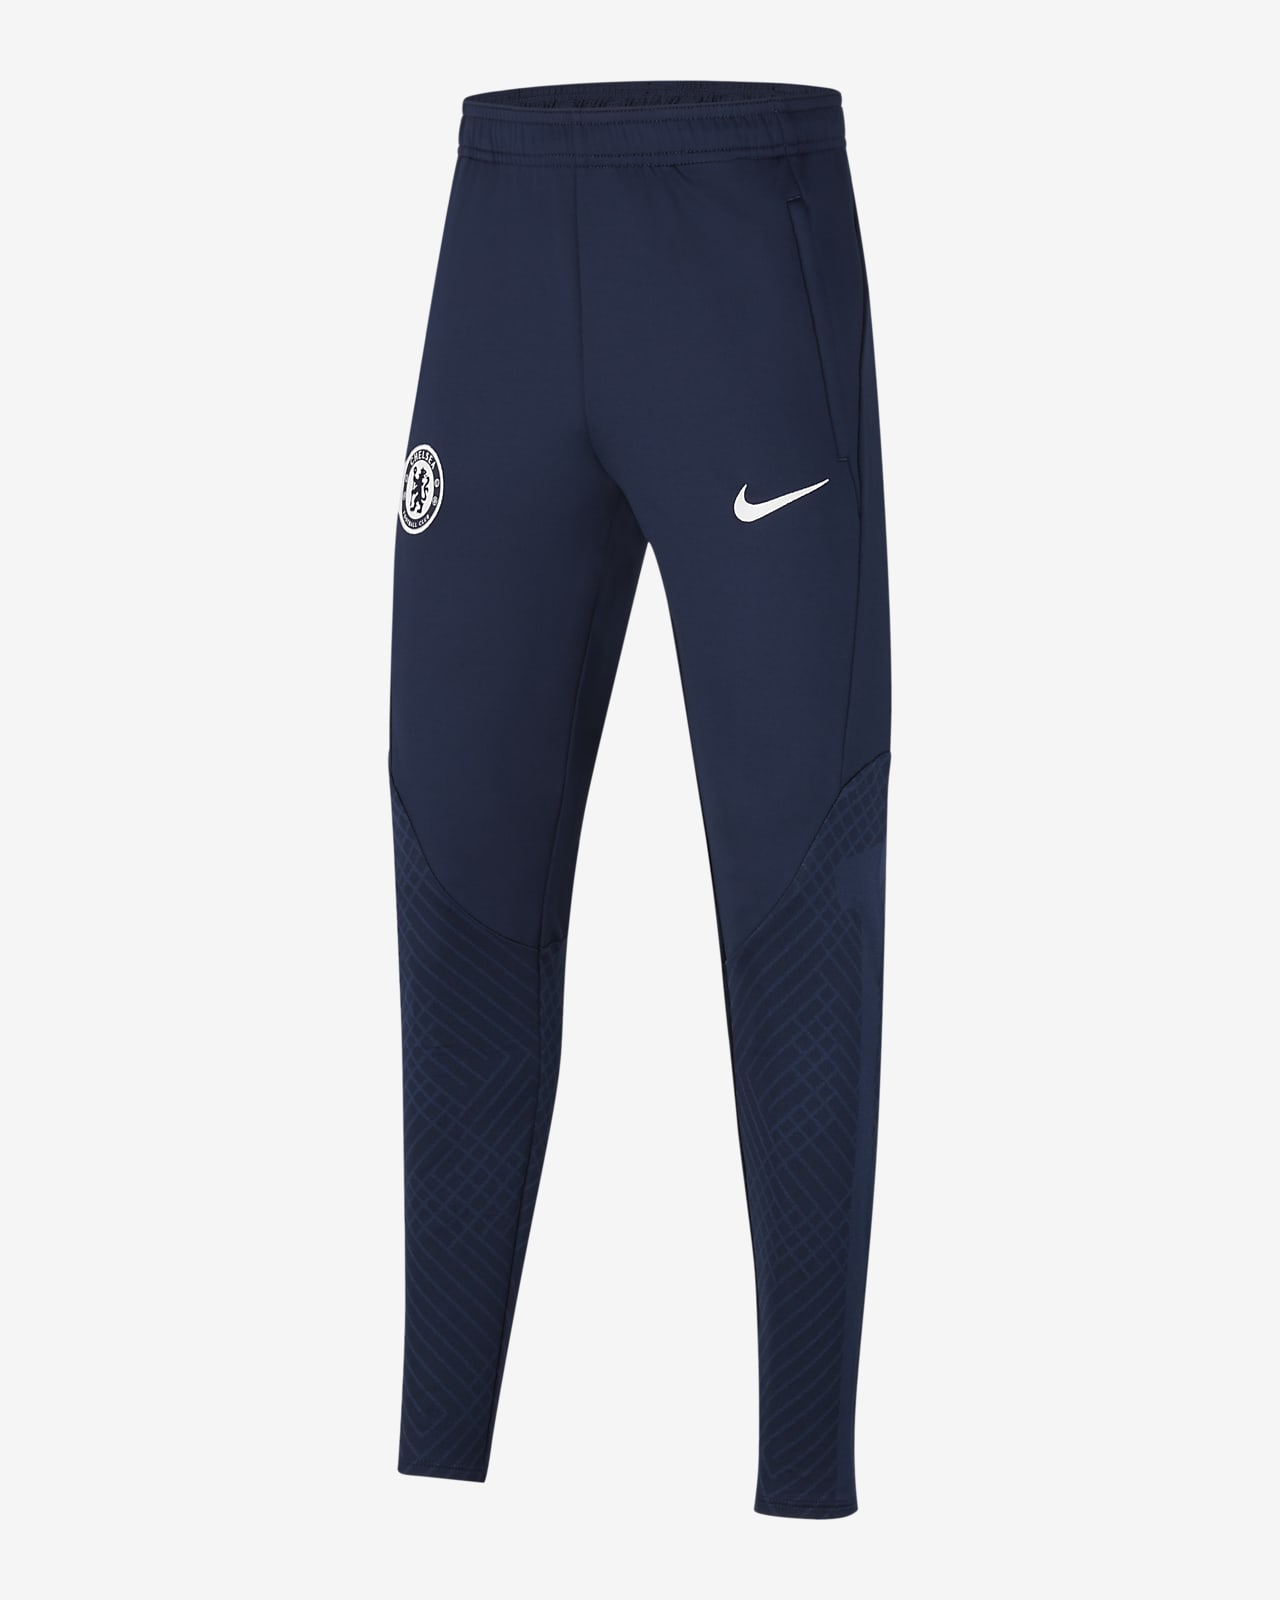 Oferta sal Grapa Chelsea FC Strike Pantalón de fútbol Nike Dri-FIT - Niño/a. Nike ES